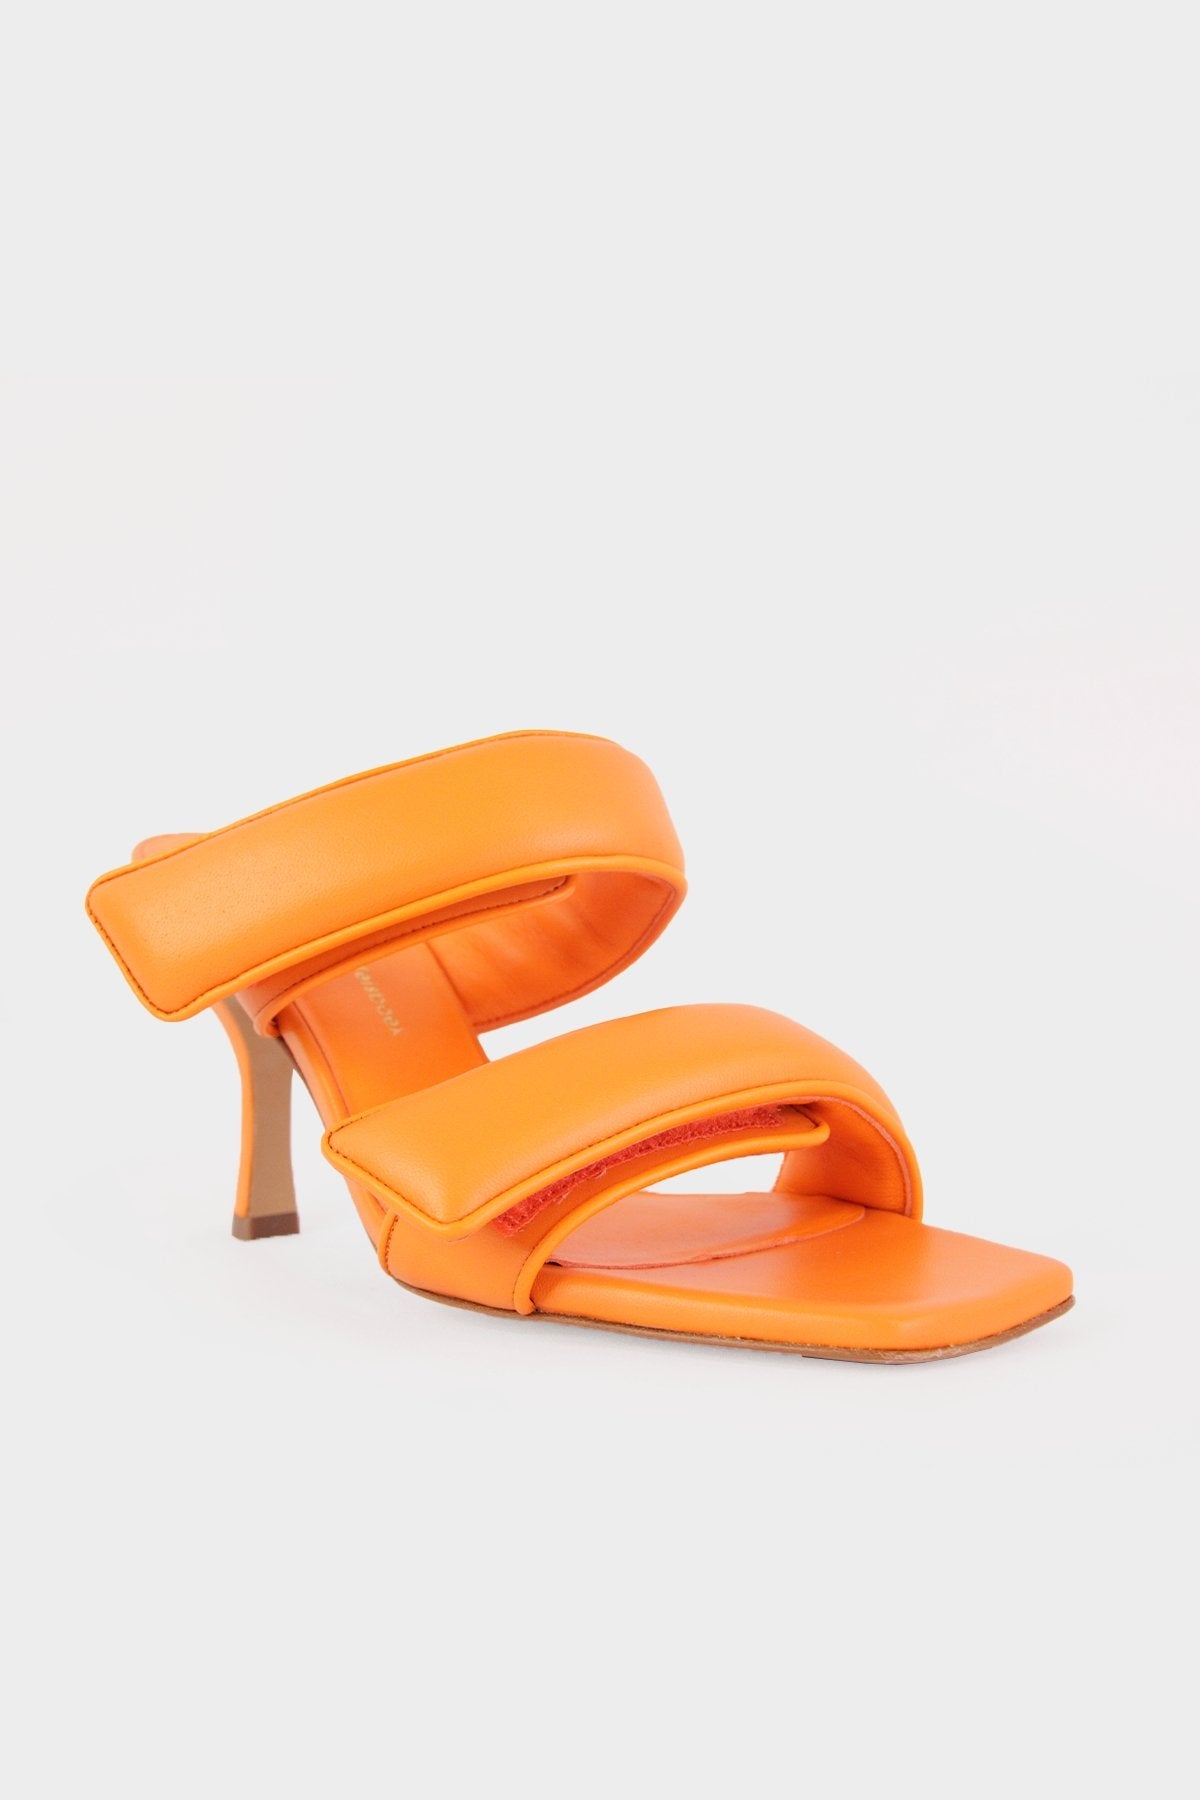 Perni Two Strap Sandal in Flash Orange - shop-olivia.com